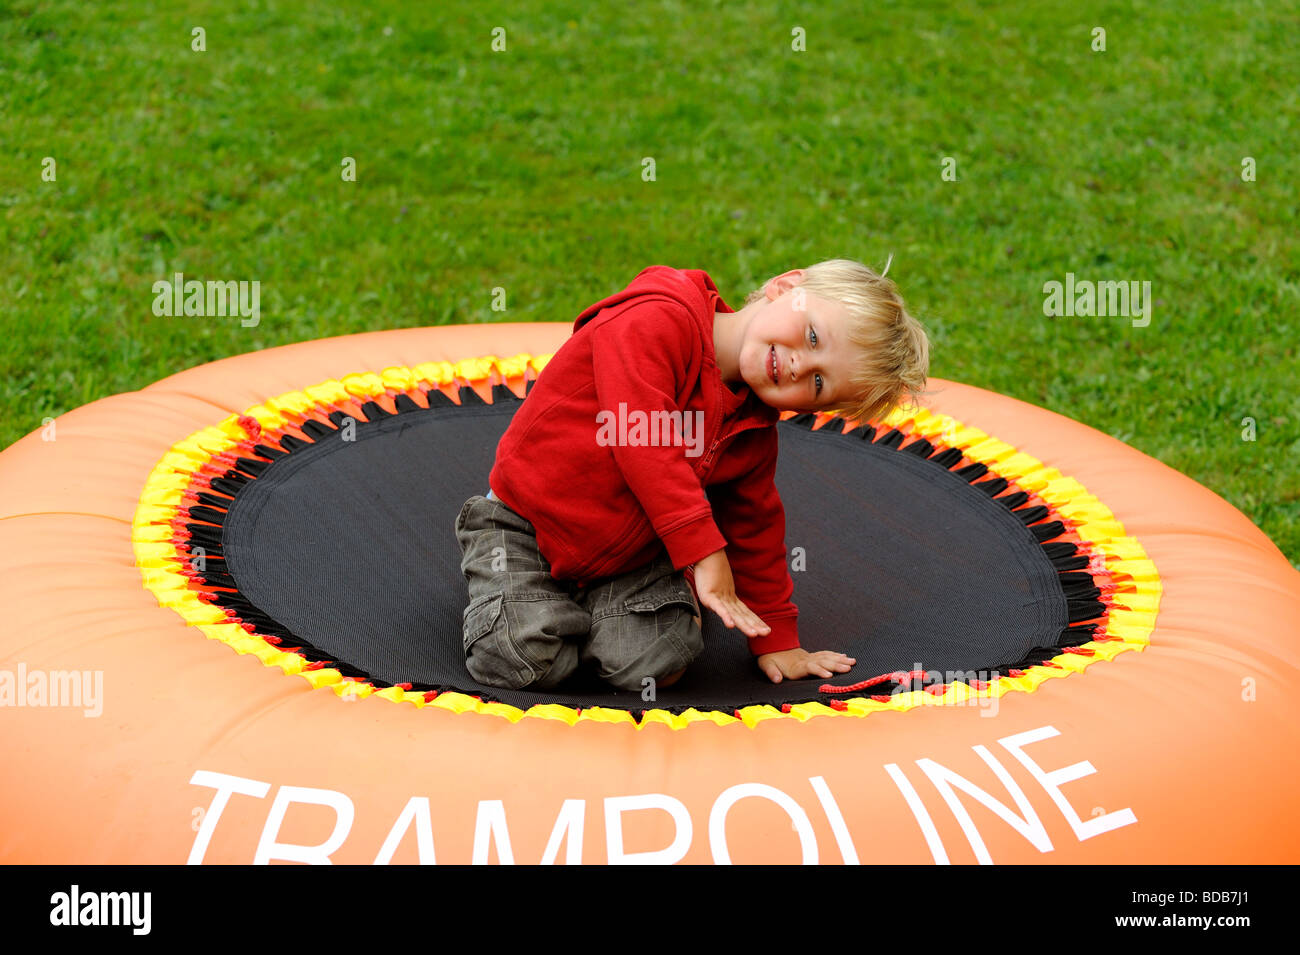 Blond Child Boy Jumping on orange Trampoline in Yard Stock Photo